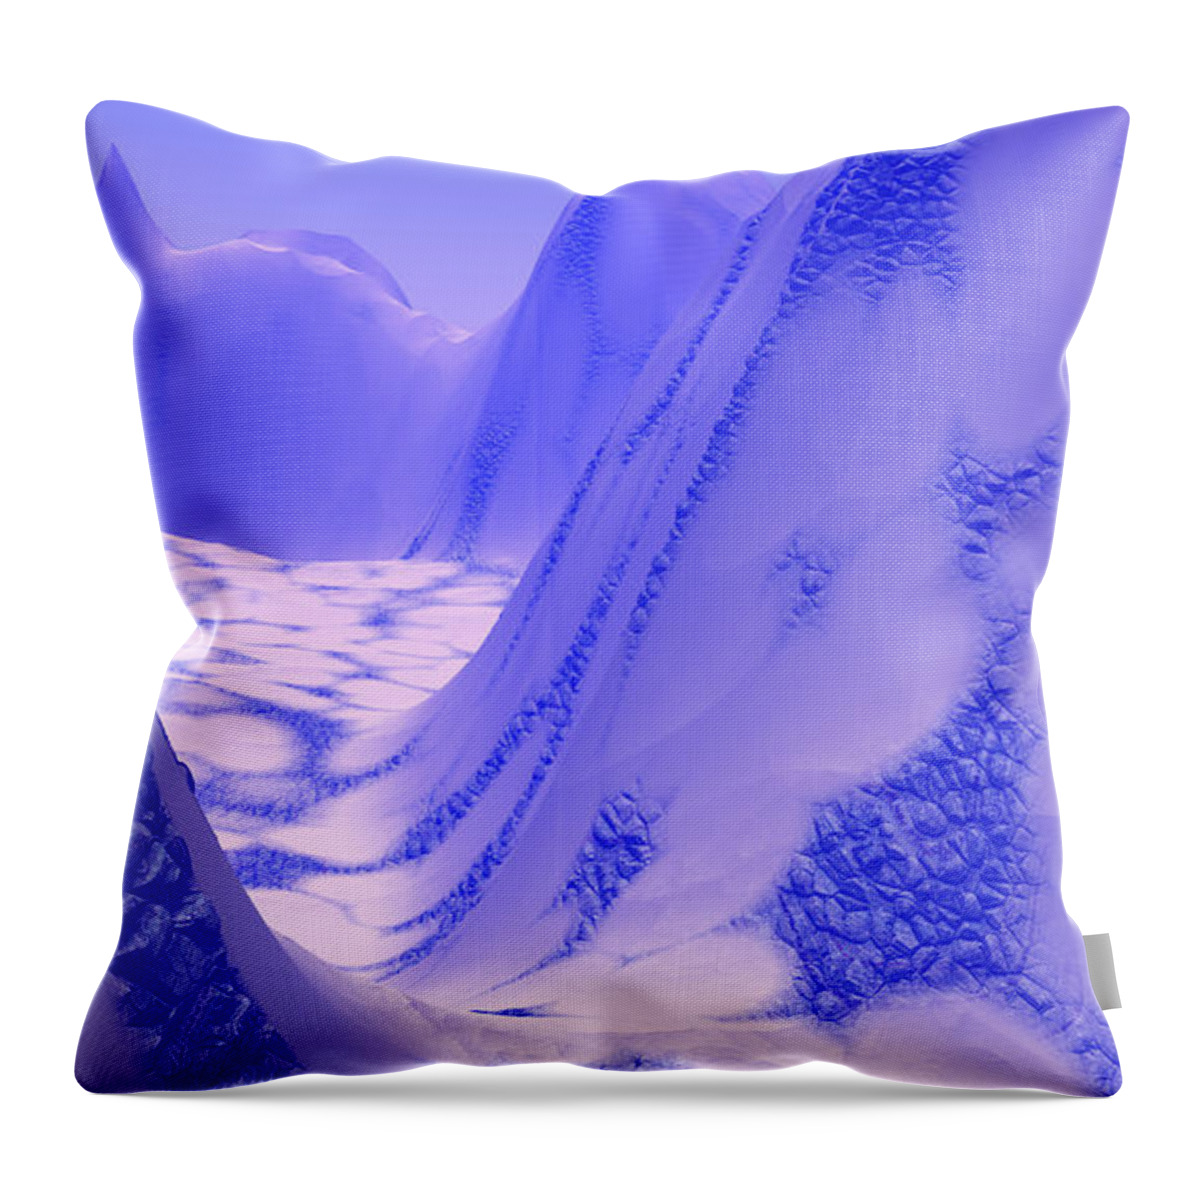 Skin Throw Pillow featuring the digital art Blue Reptile Planet by Bernie Sirelson